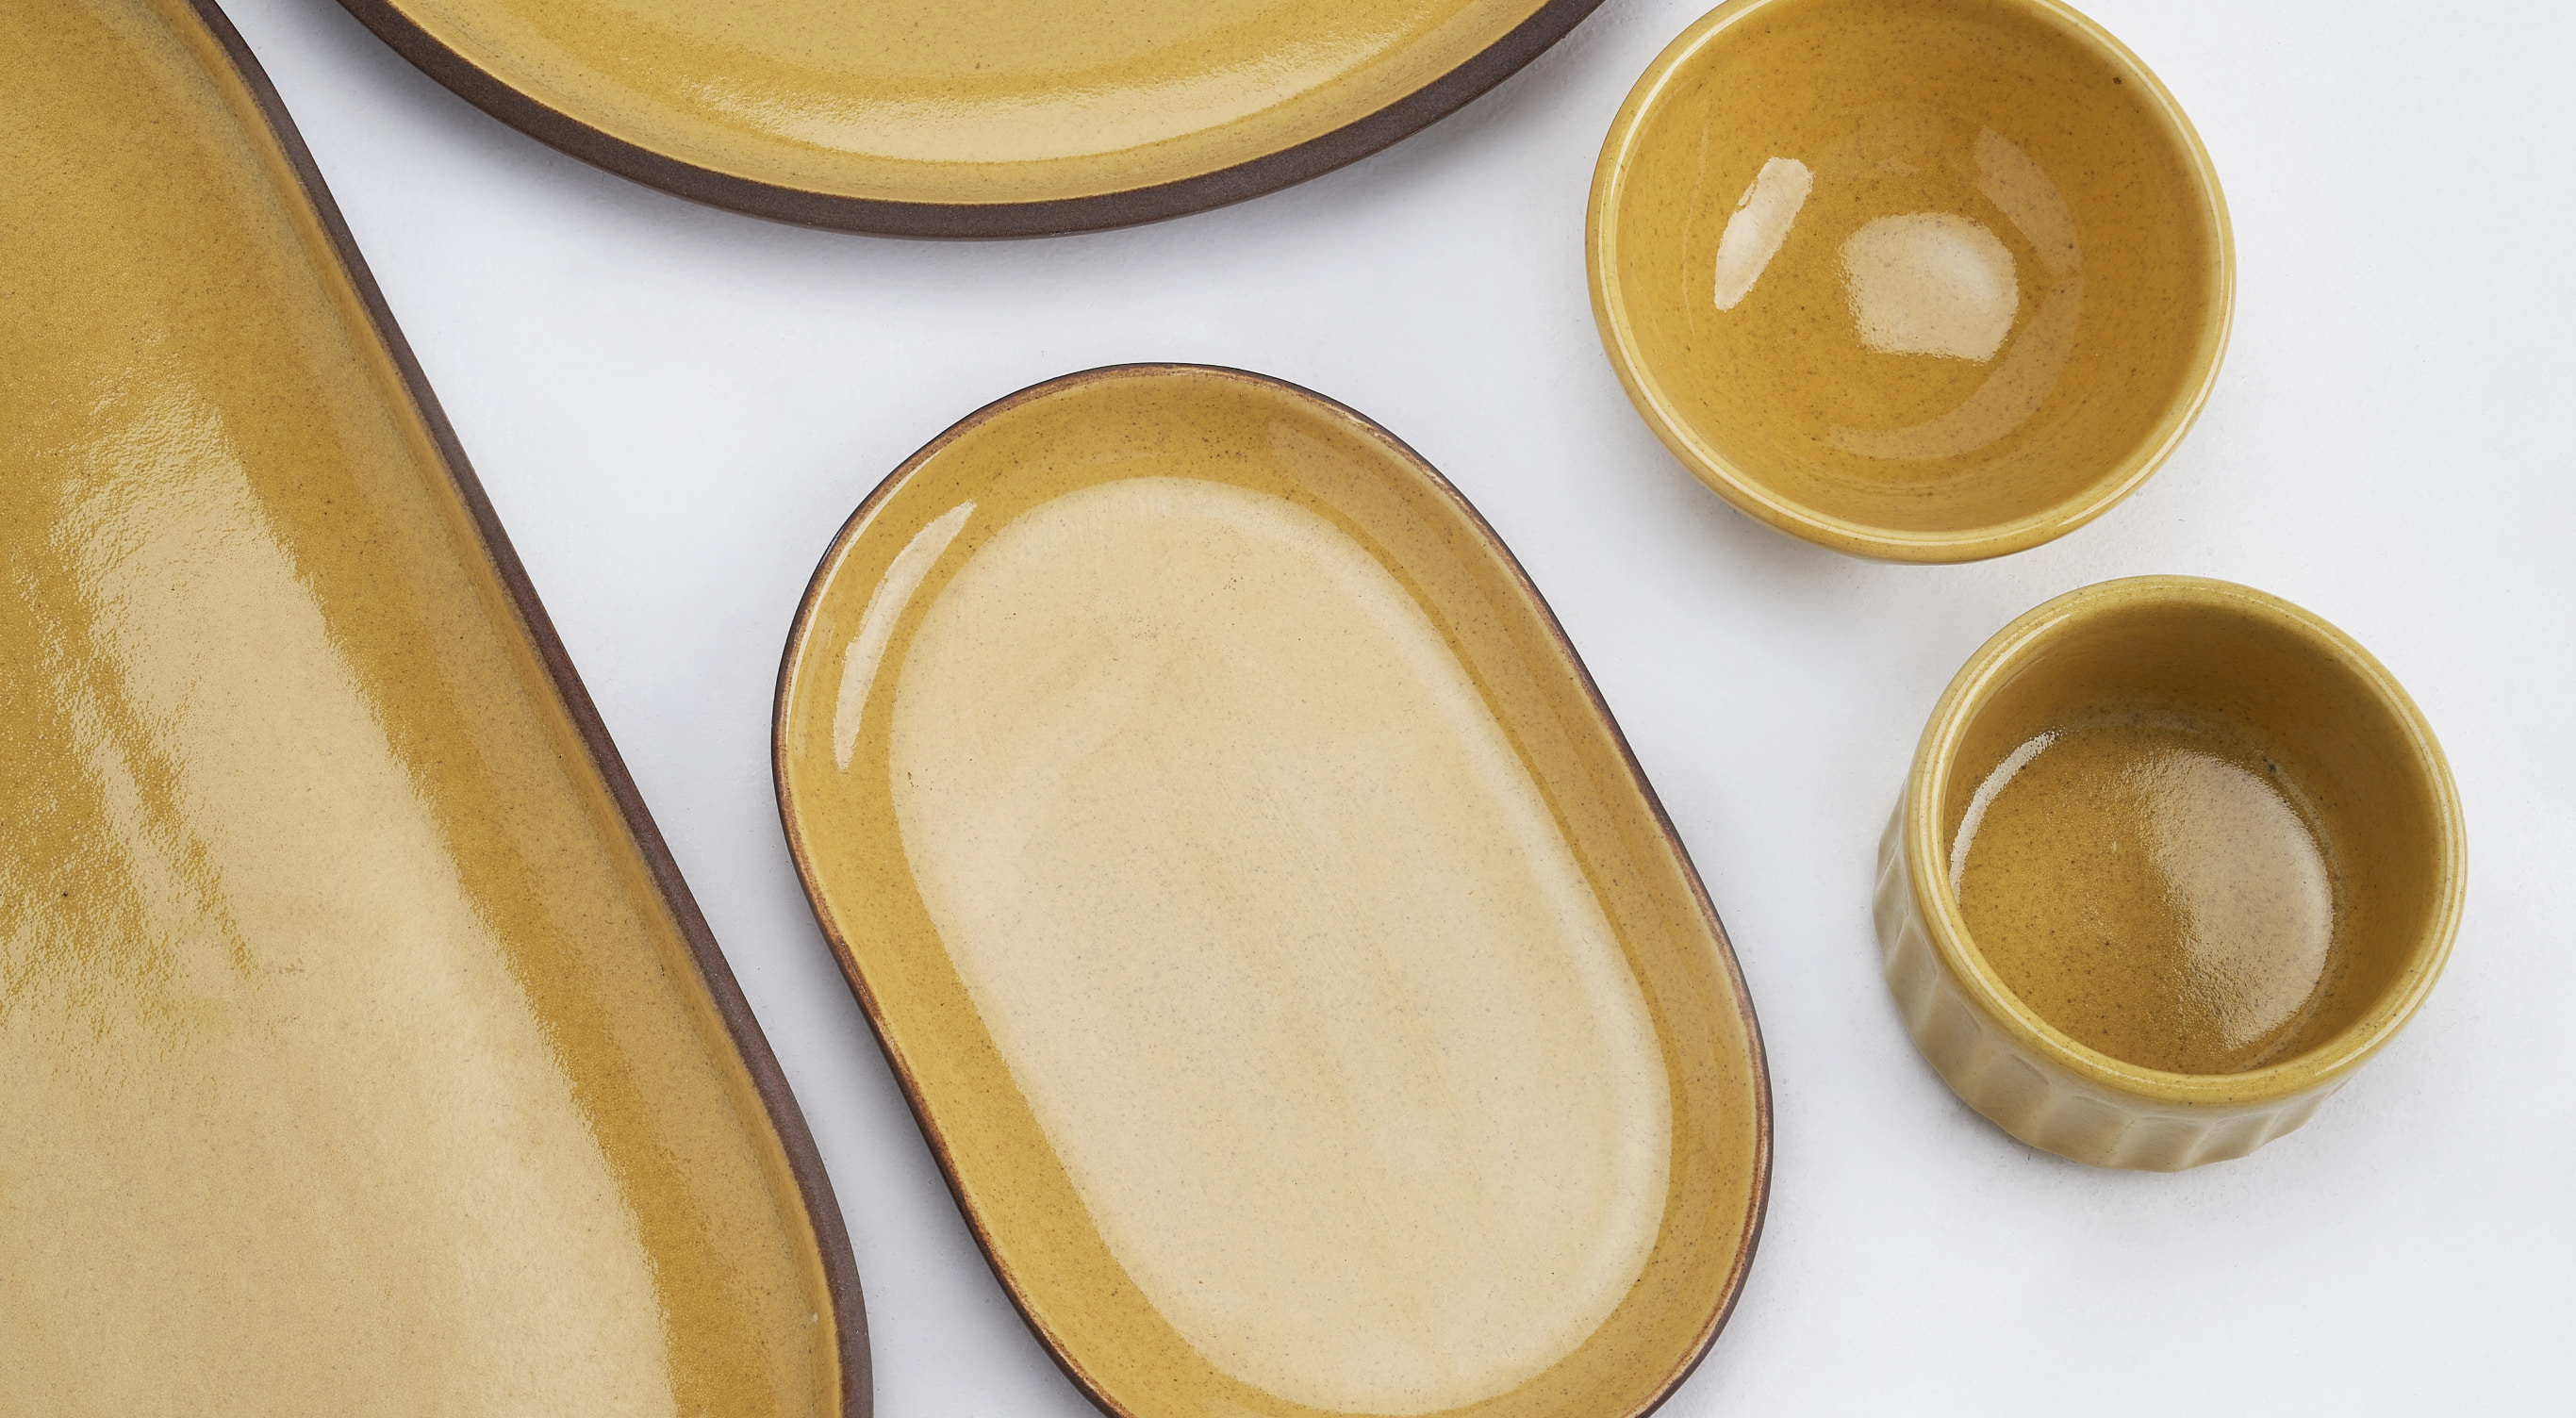 Kevala Ceramics in partnership with The Ritz-Carlton